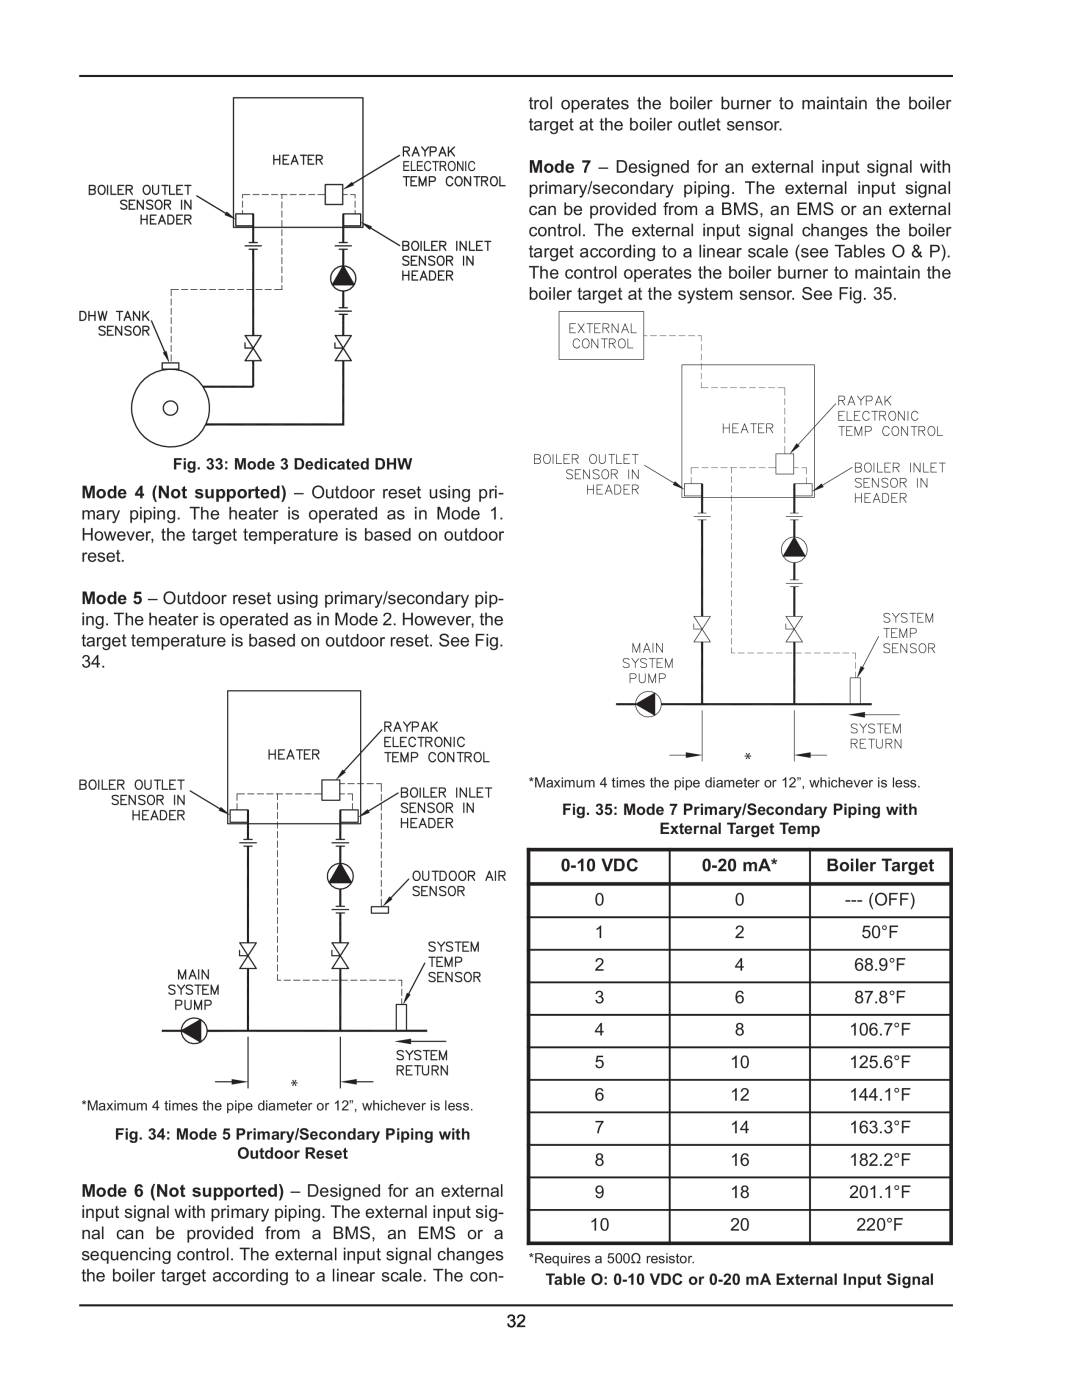 Raypak 5042004 operating instructions 0-10VDC, 0-20mA, Boiler Target 